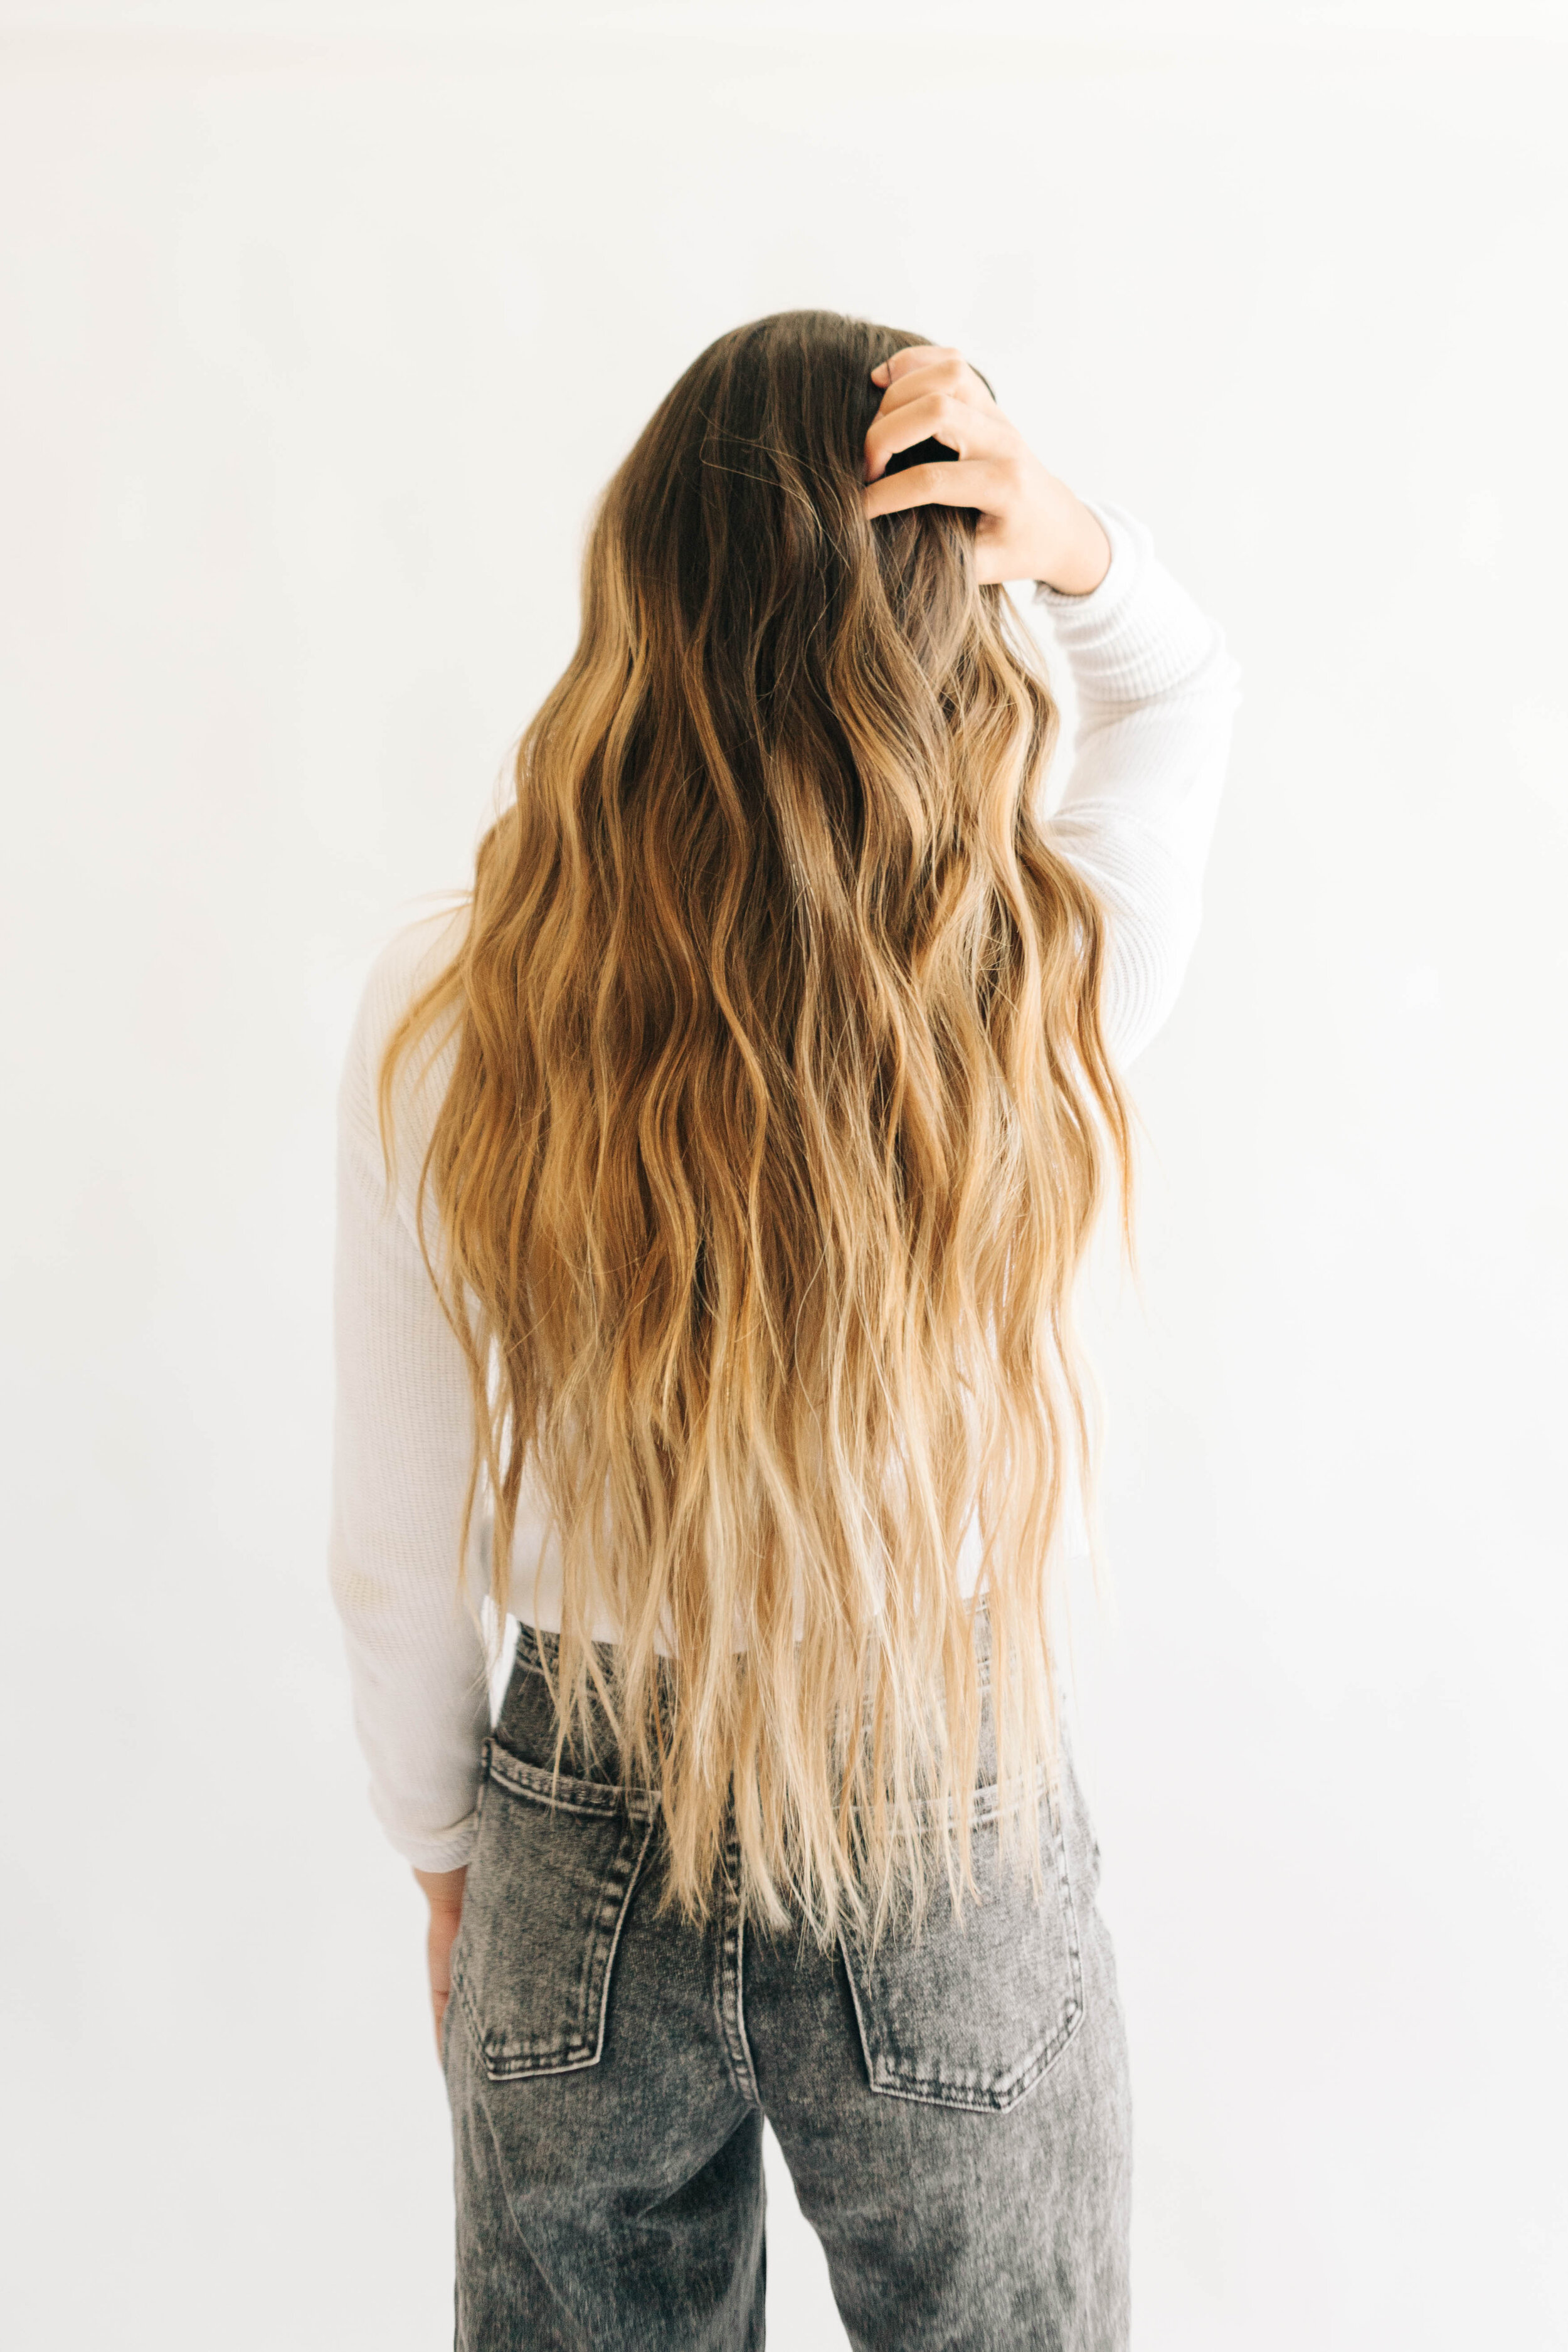 hair extensions tumblr